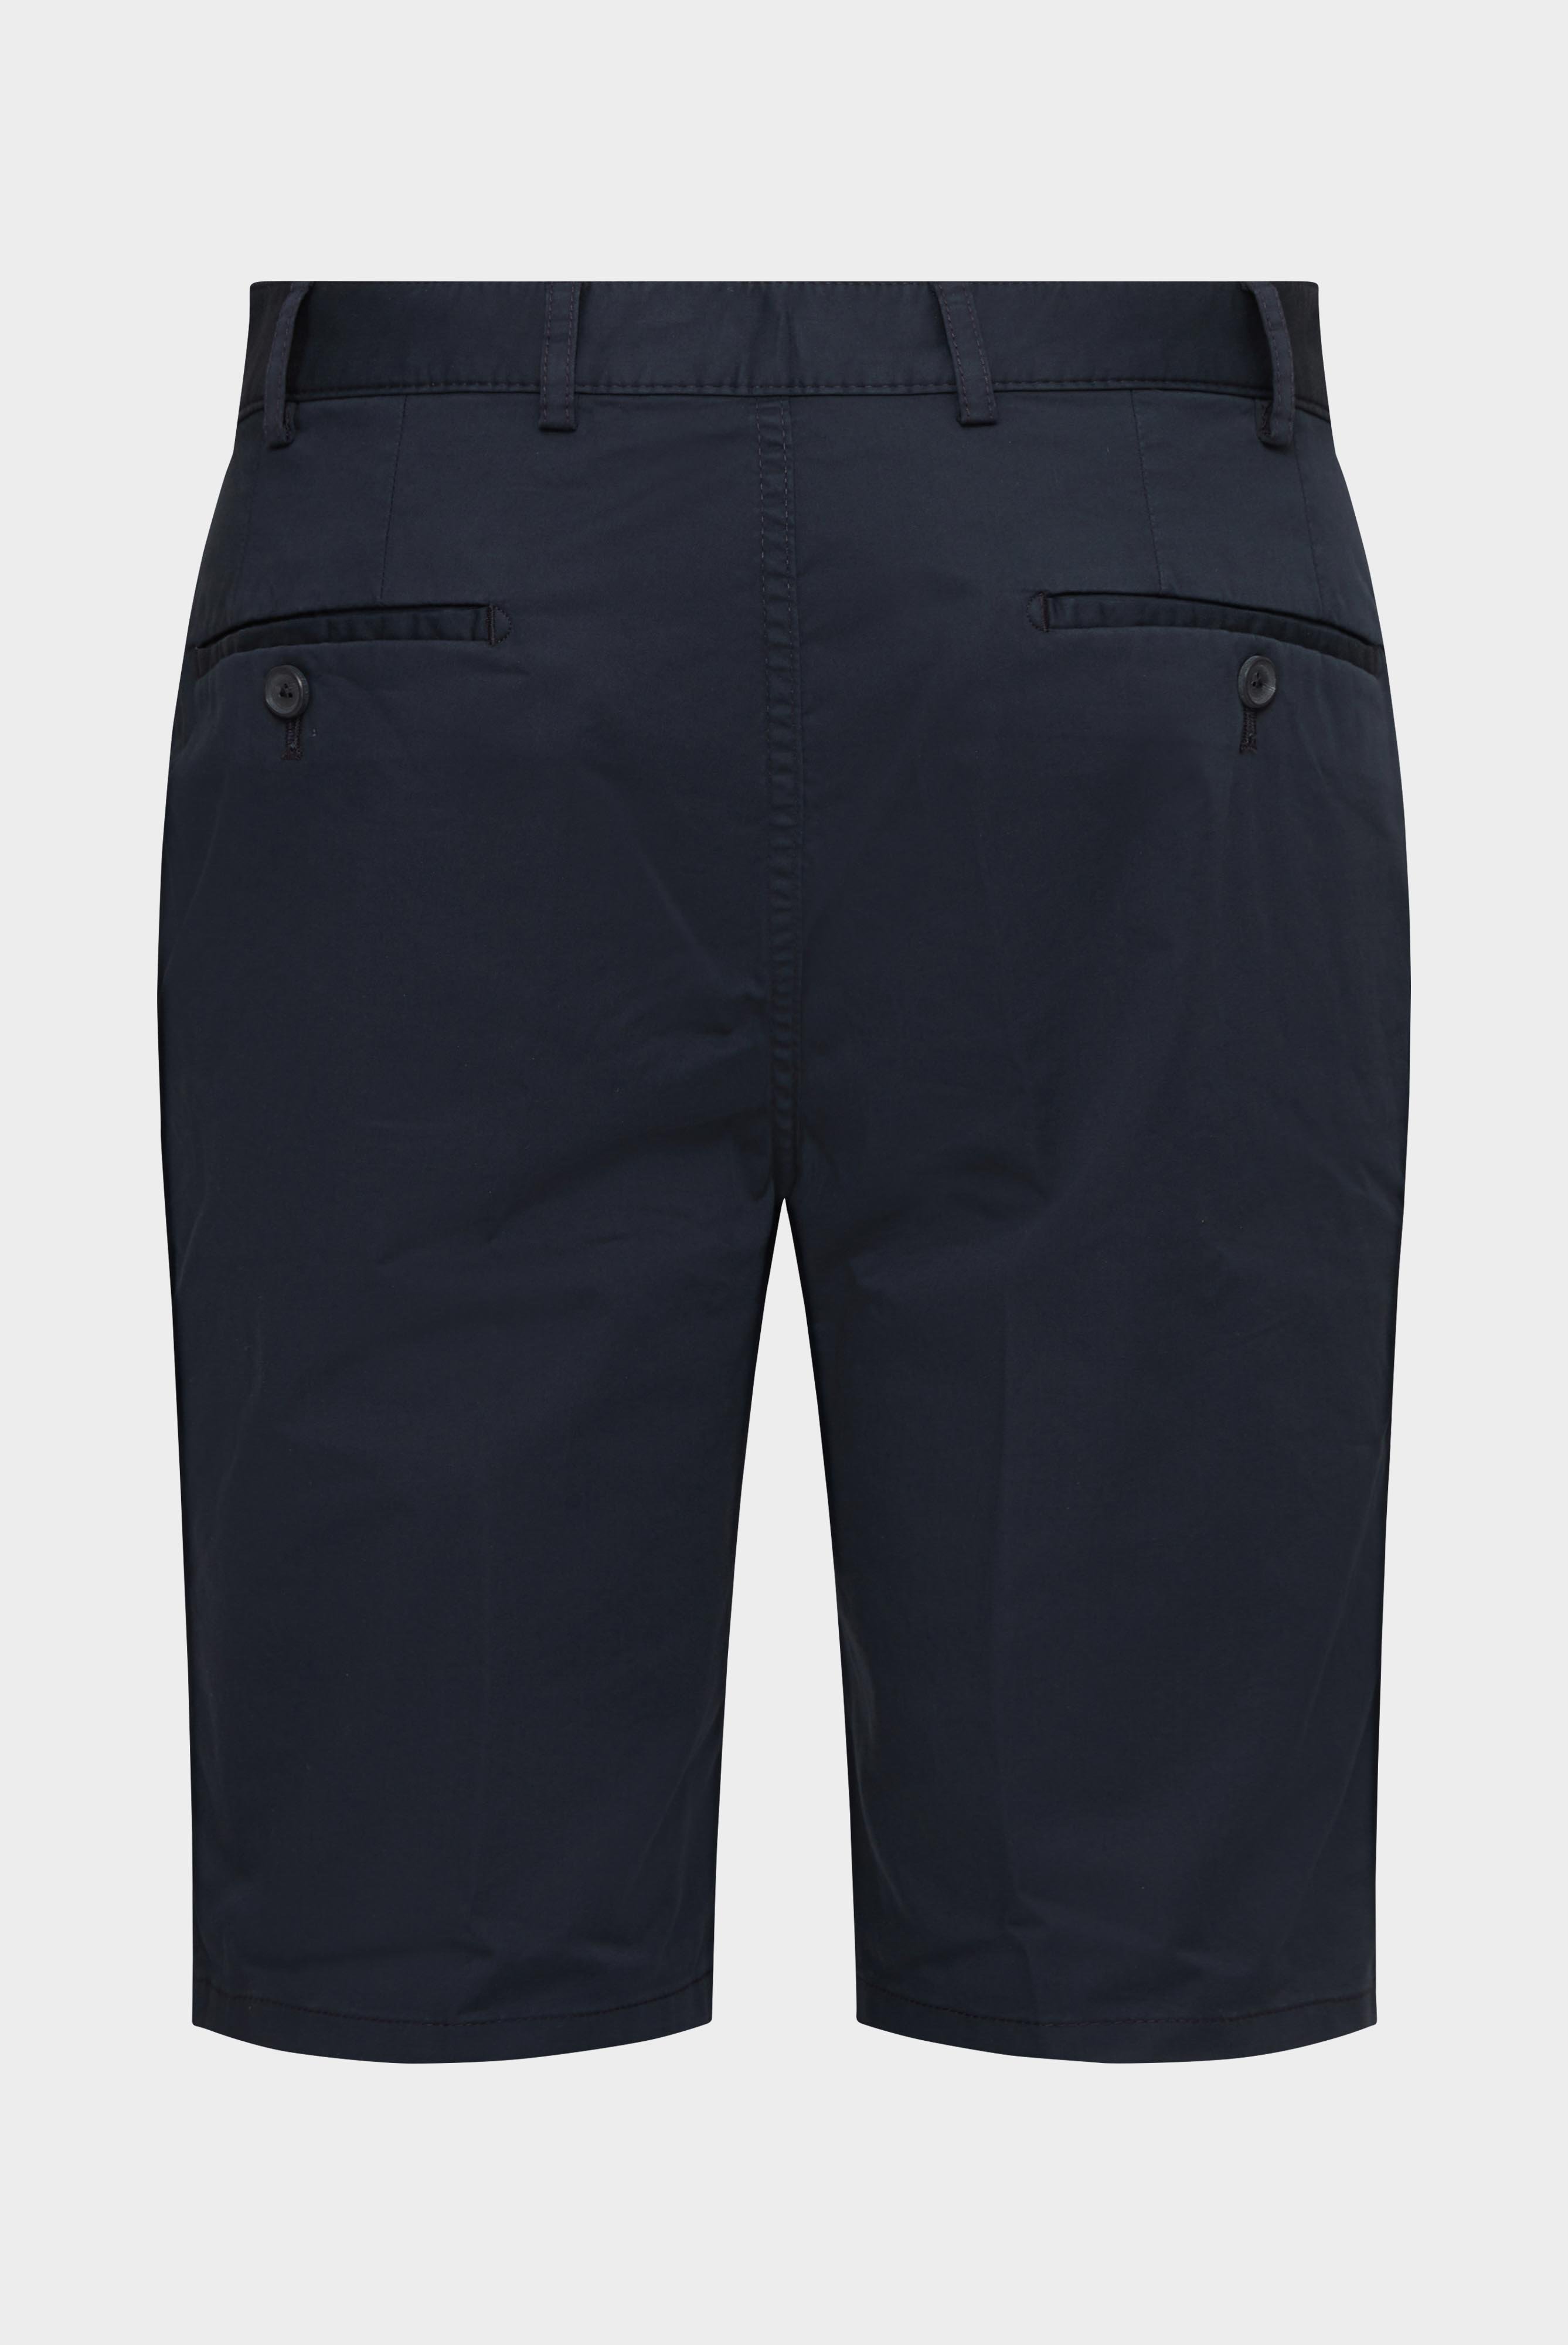 Jeans & Trousers+Men''s Bermuda shorts+80.5974..J00151.790.48